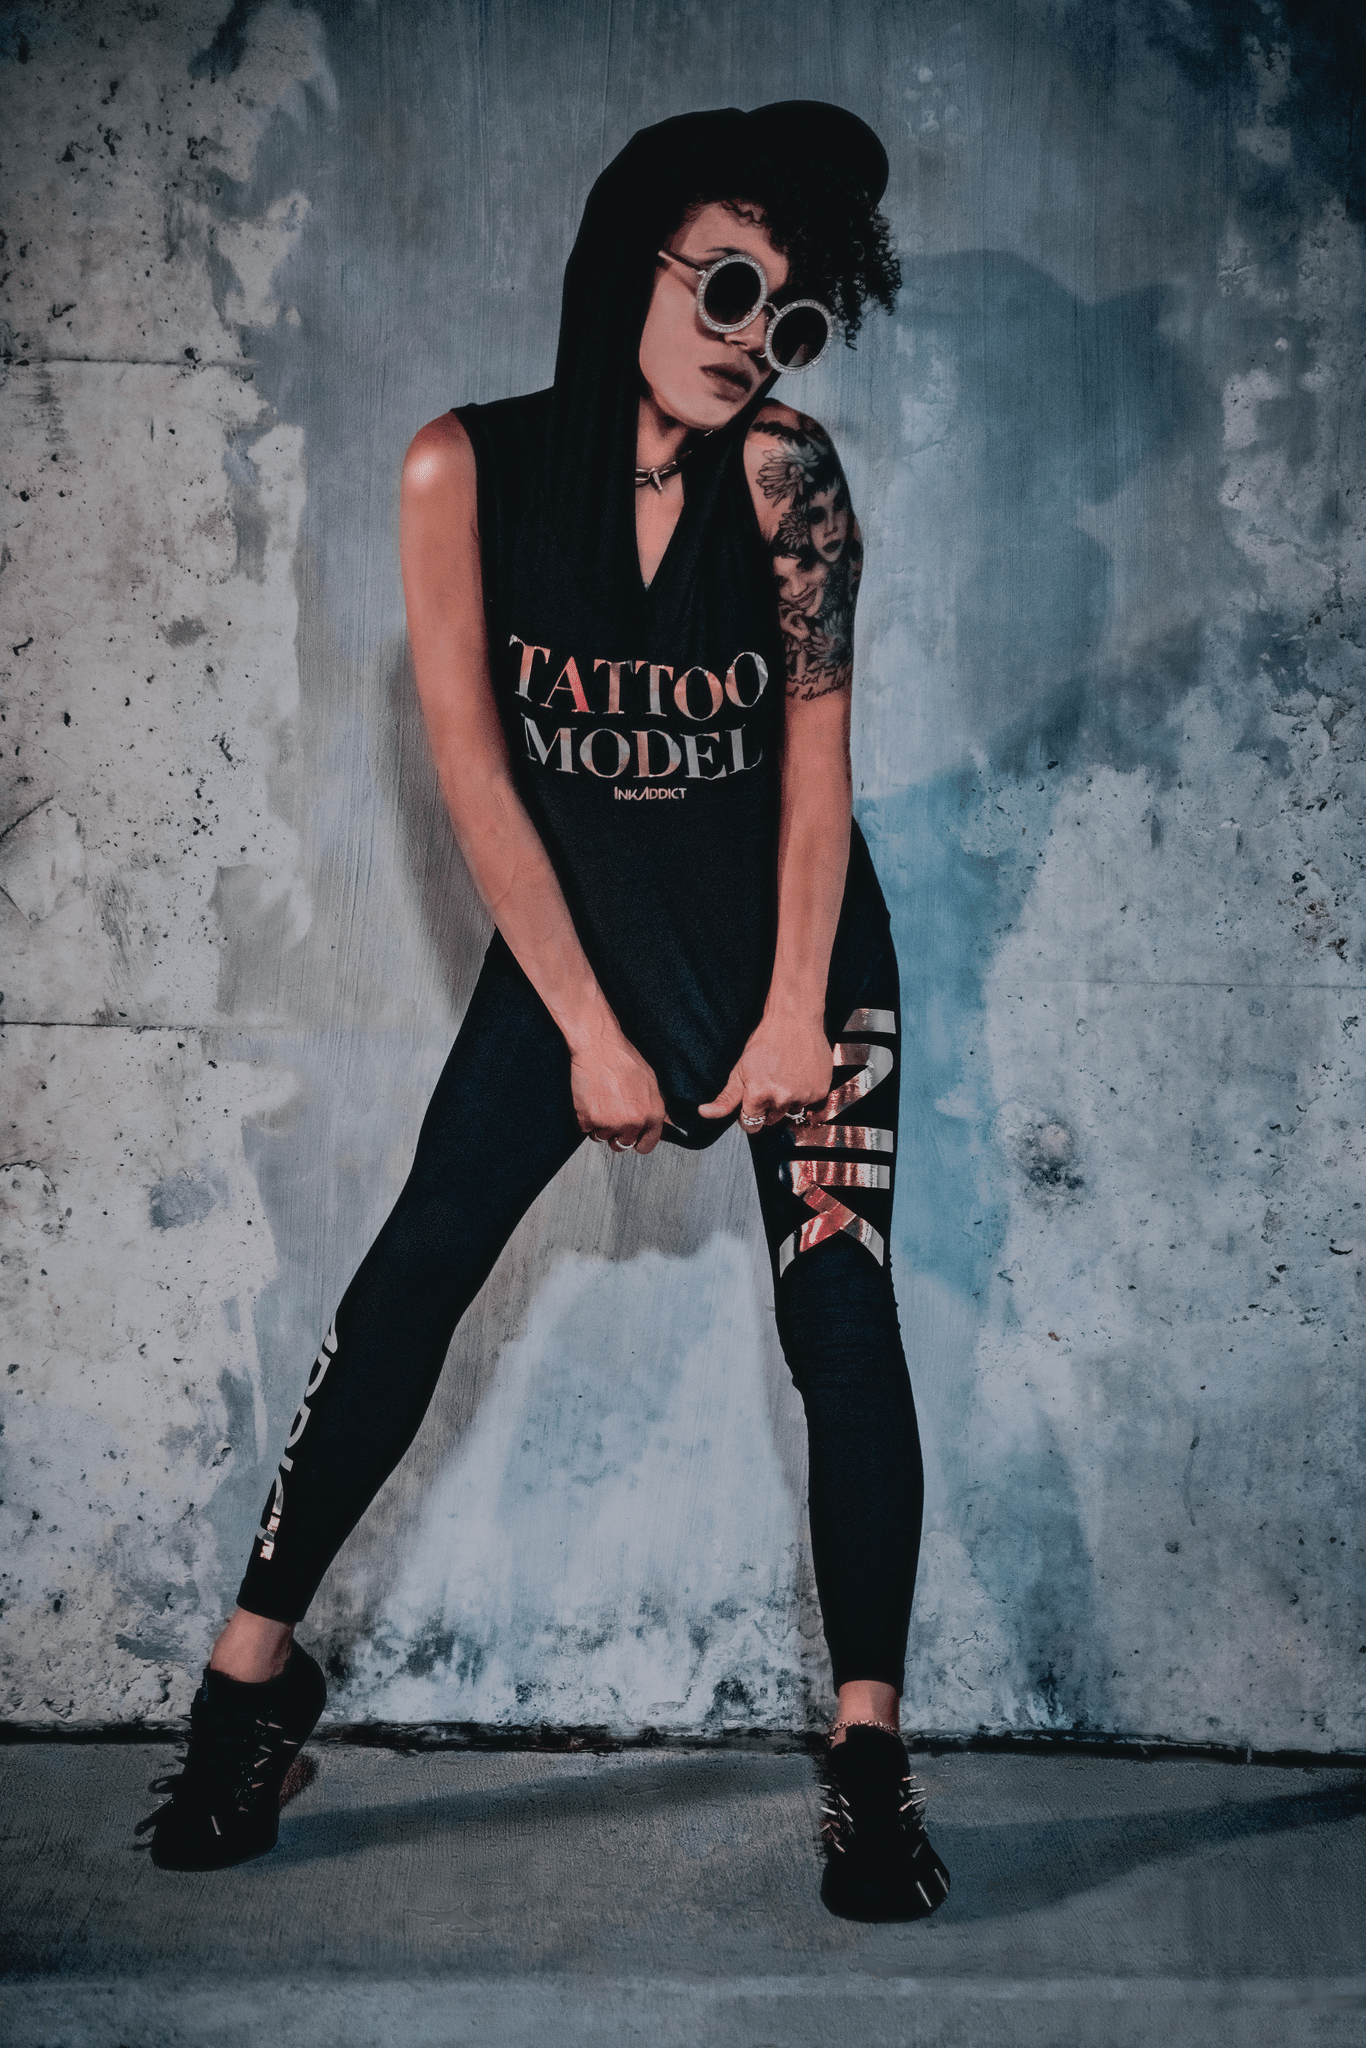 Tattoo Model Chroma Women's Sleeveless Hoodie Tee